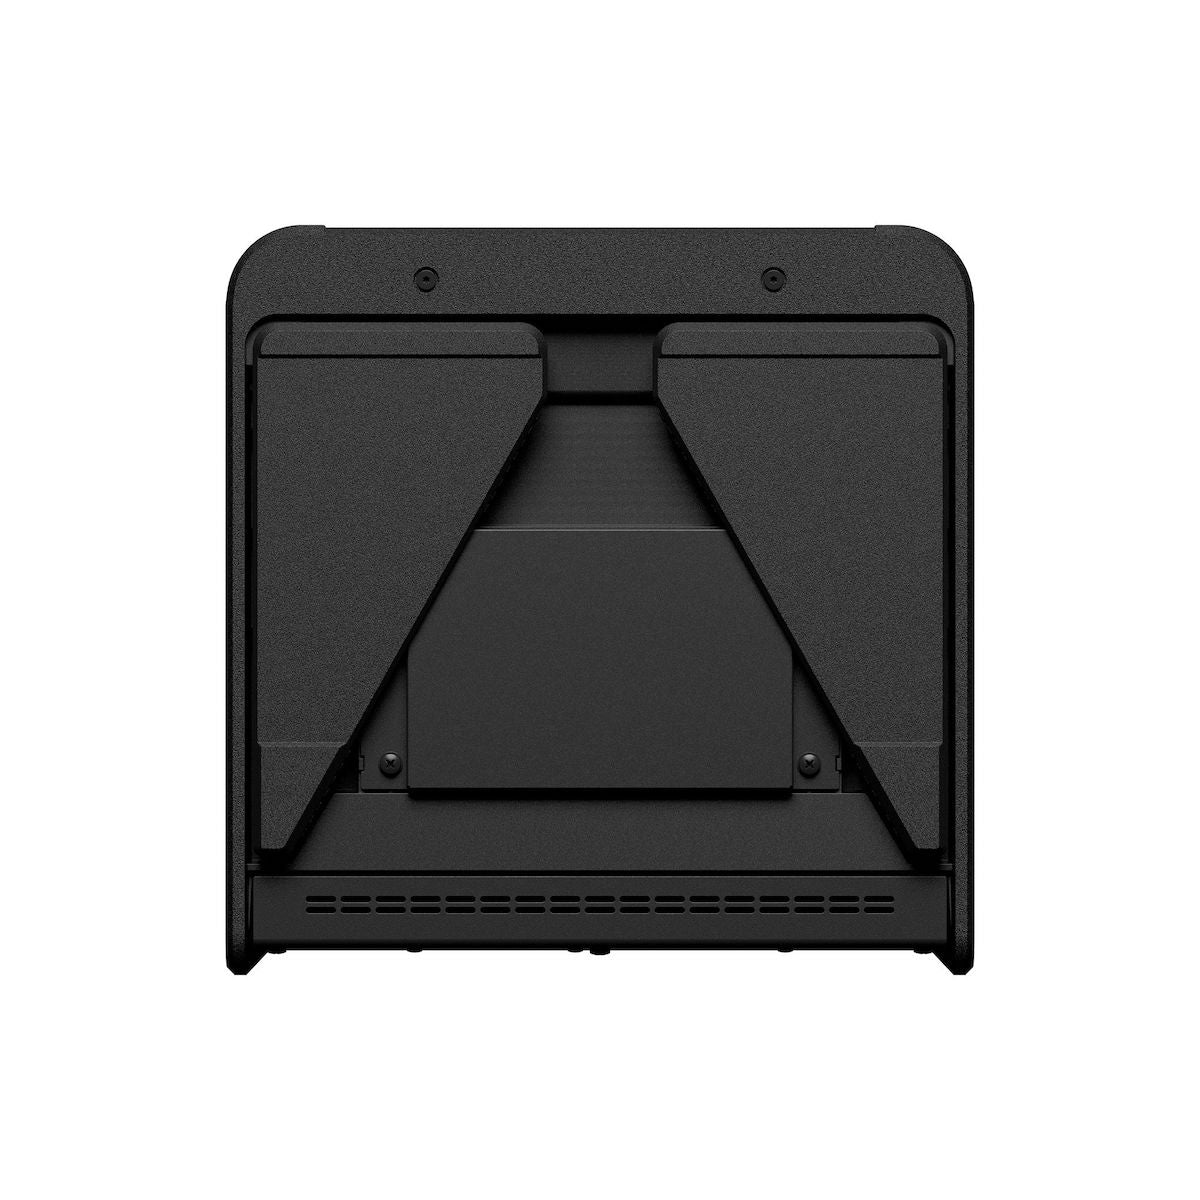 [DEMO UNIT] Yamaha StagePas 200 Portable PA System